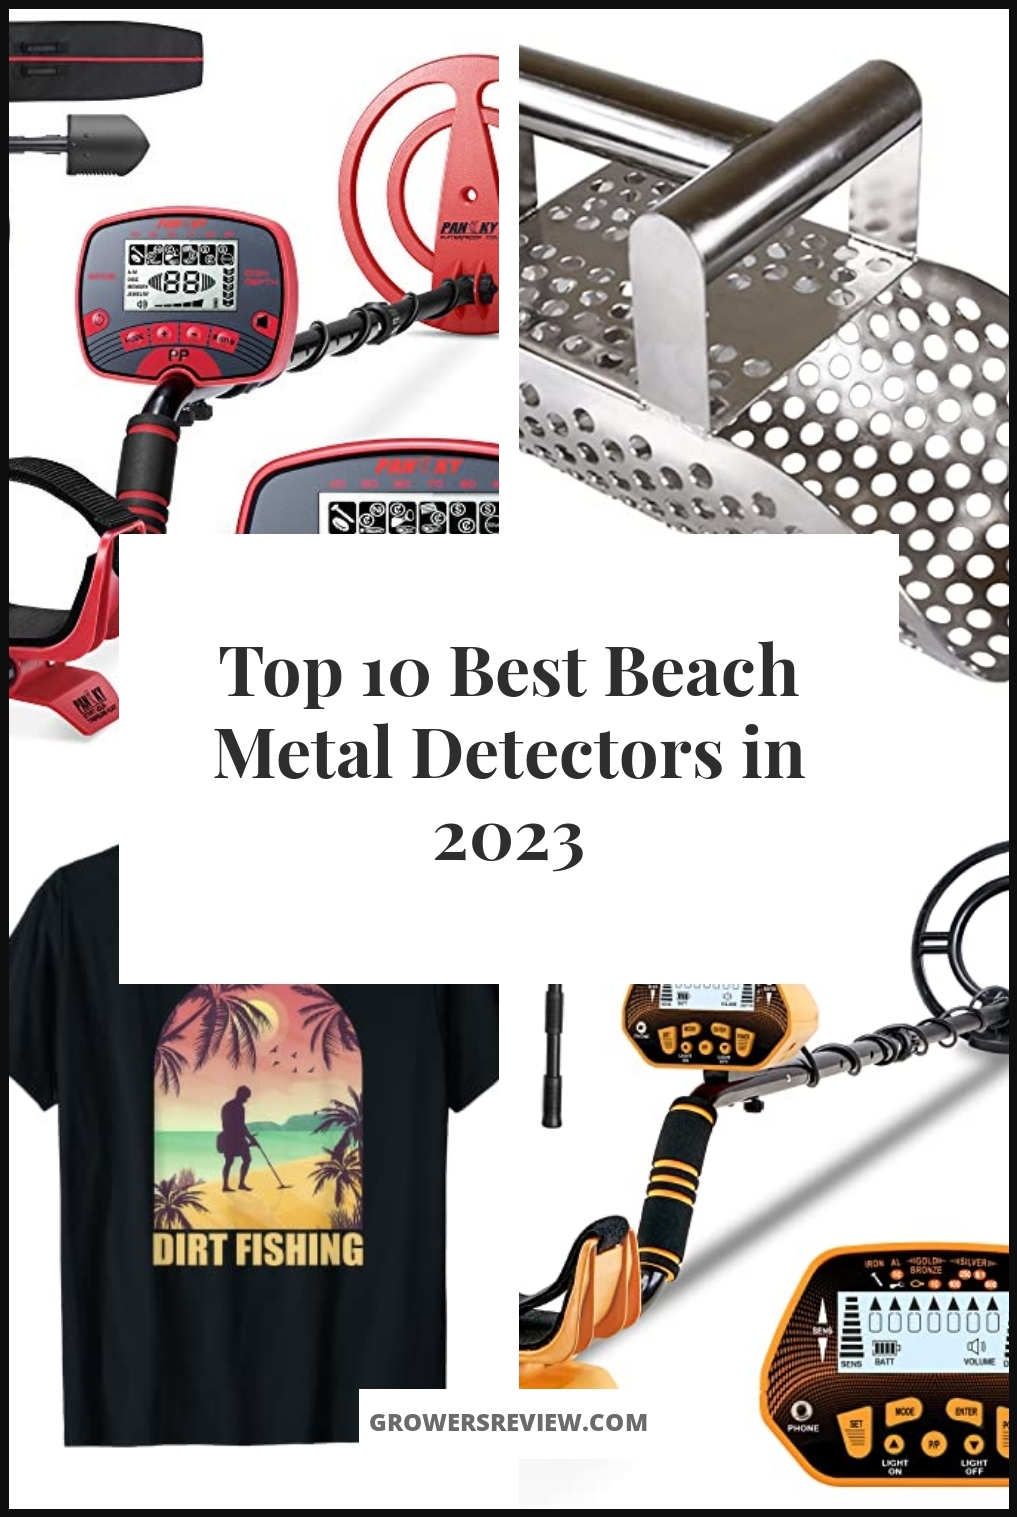 Best Beach Metal Detectors - Buying Guide